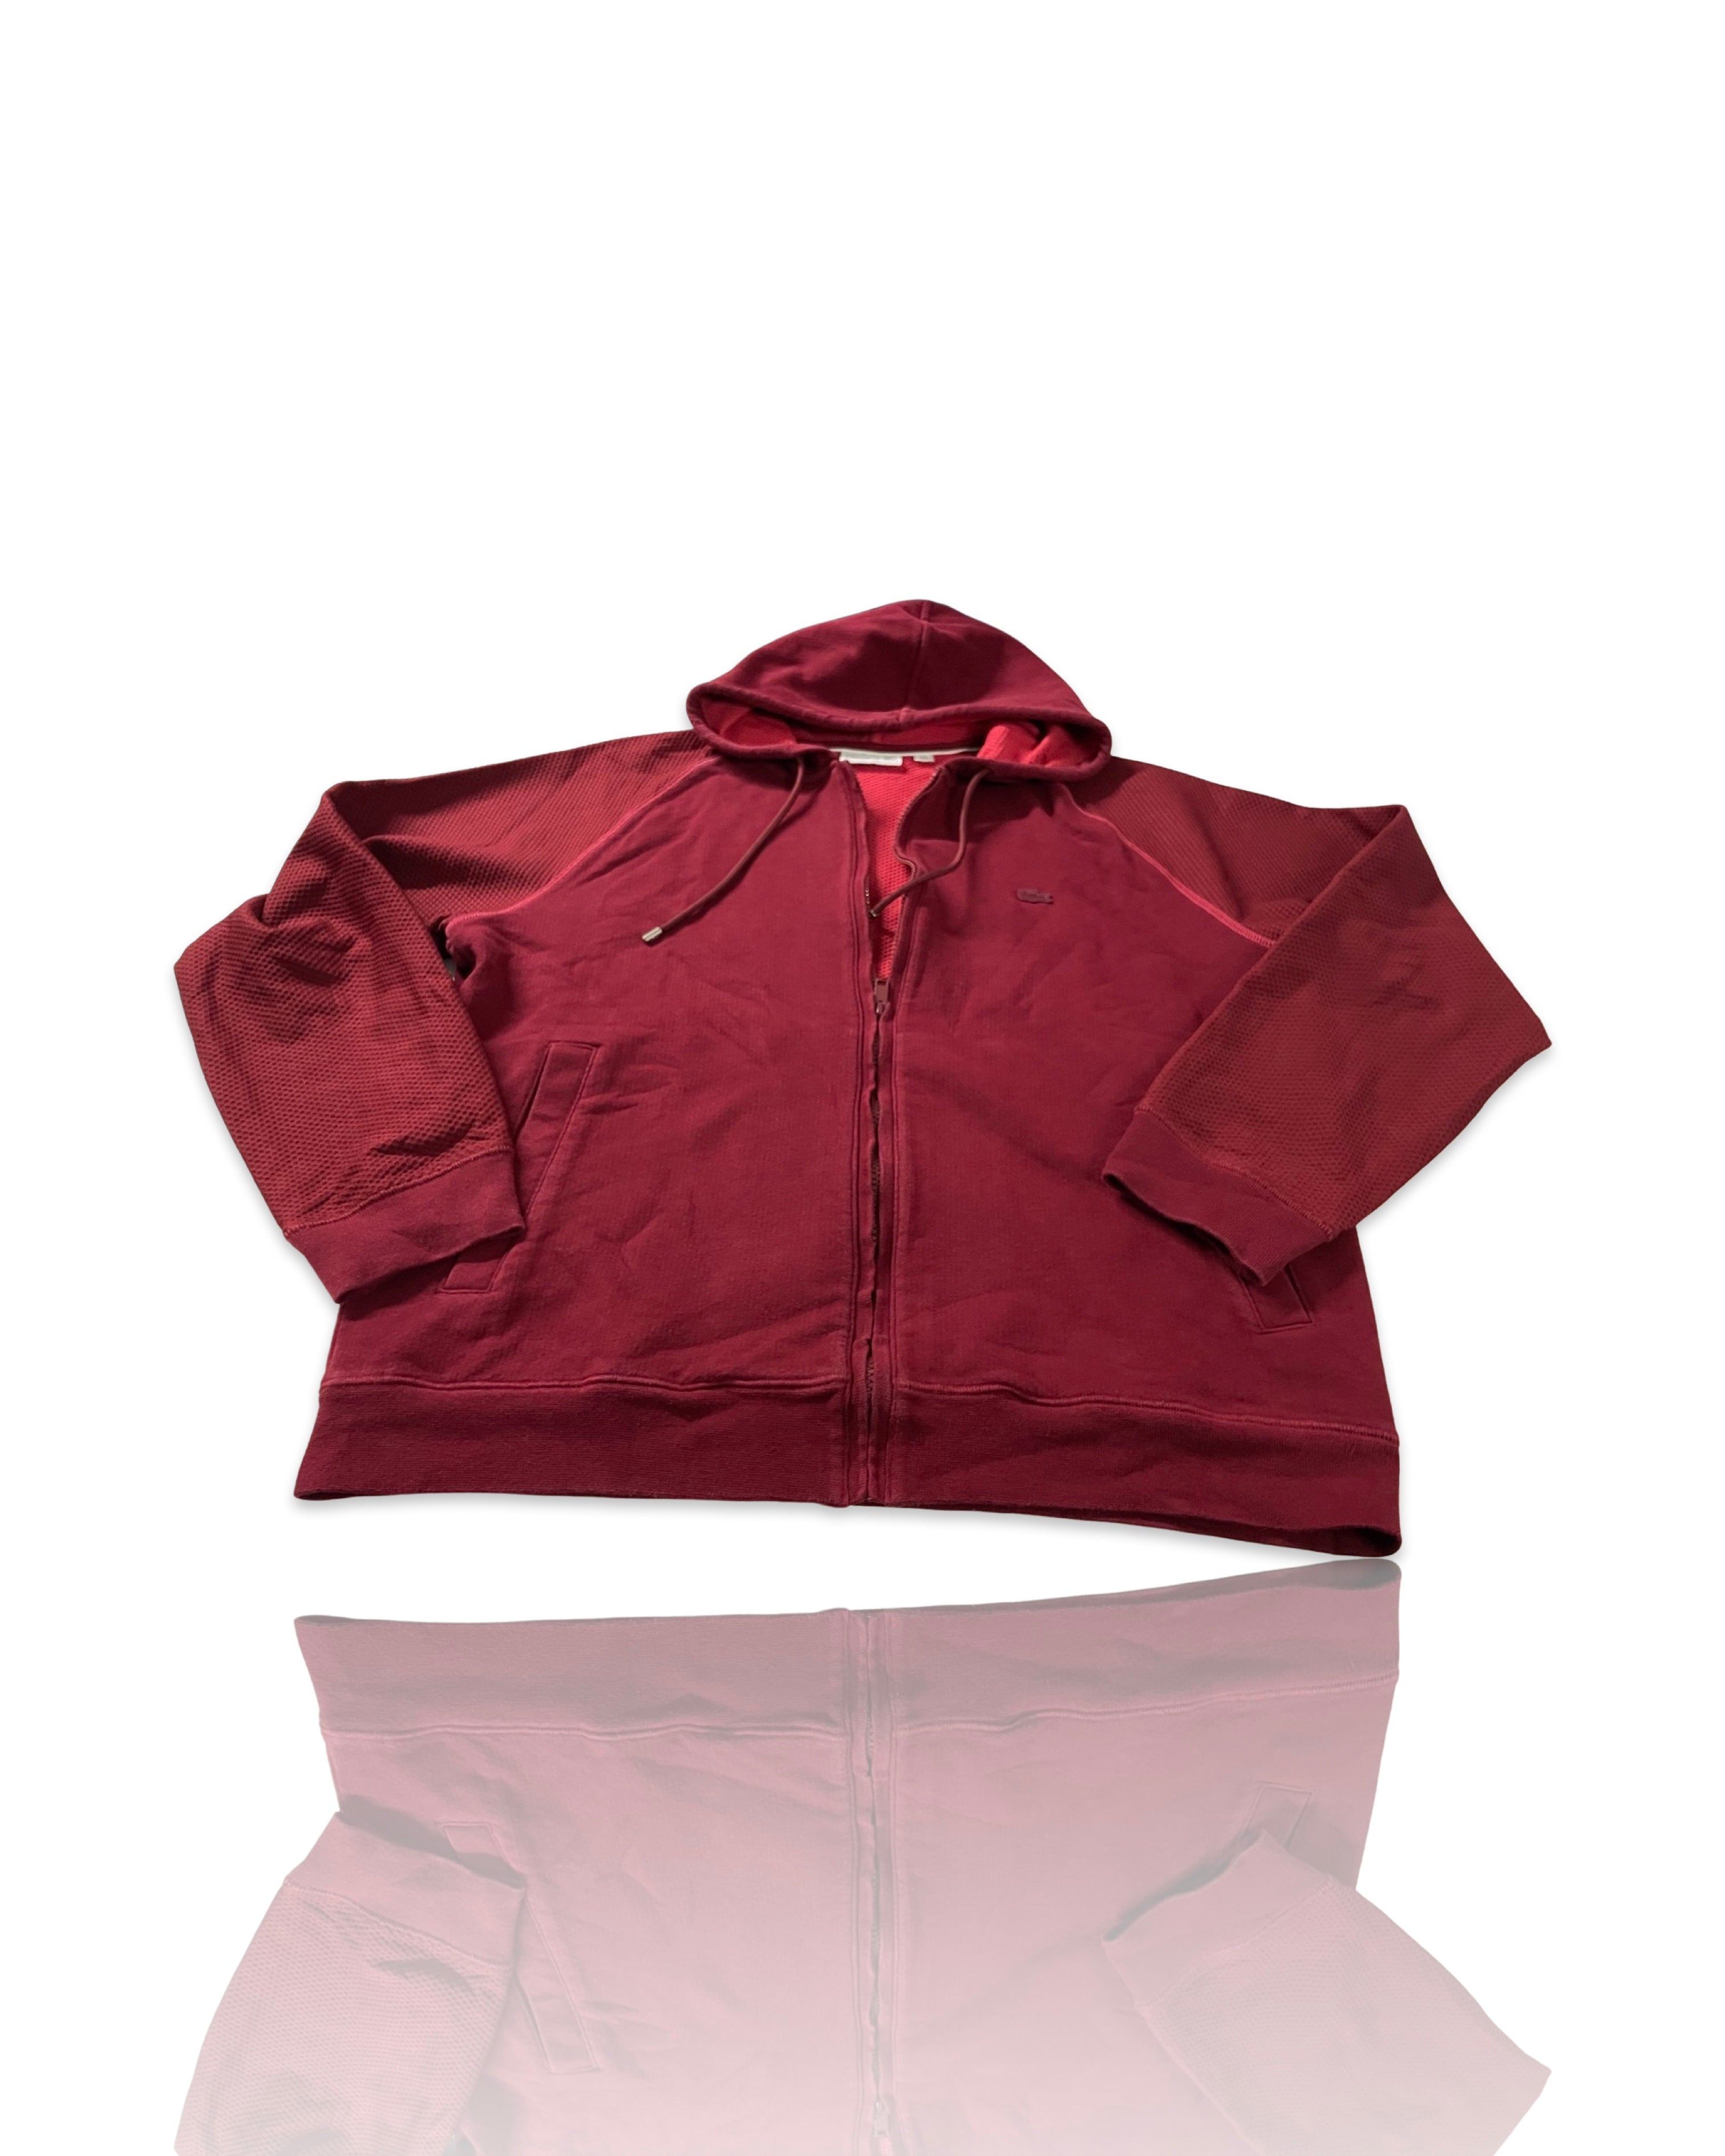 Cliche Vintage| Vintage red Lacoste LACOSTE vintage hooded jacket | Women’s hoodie 00s 90s full zip sport sweater | Cozy warm classic sweatshirt jumper for women men | Large Size